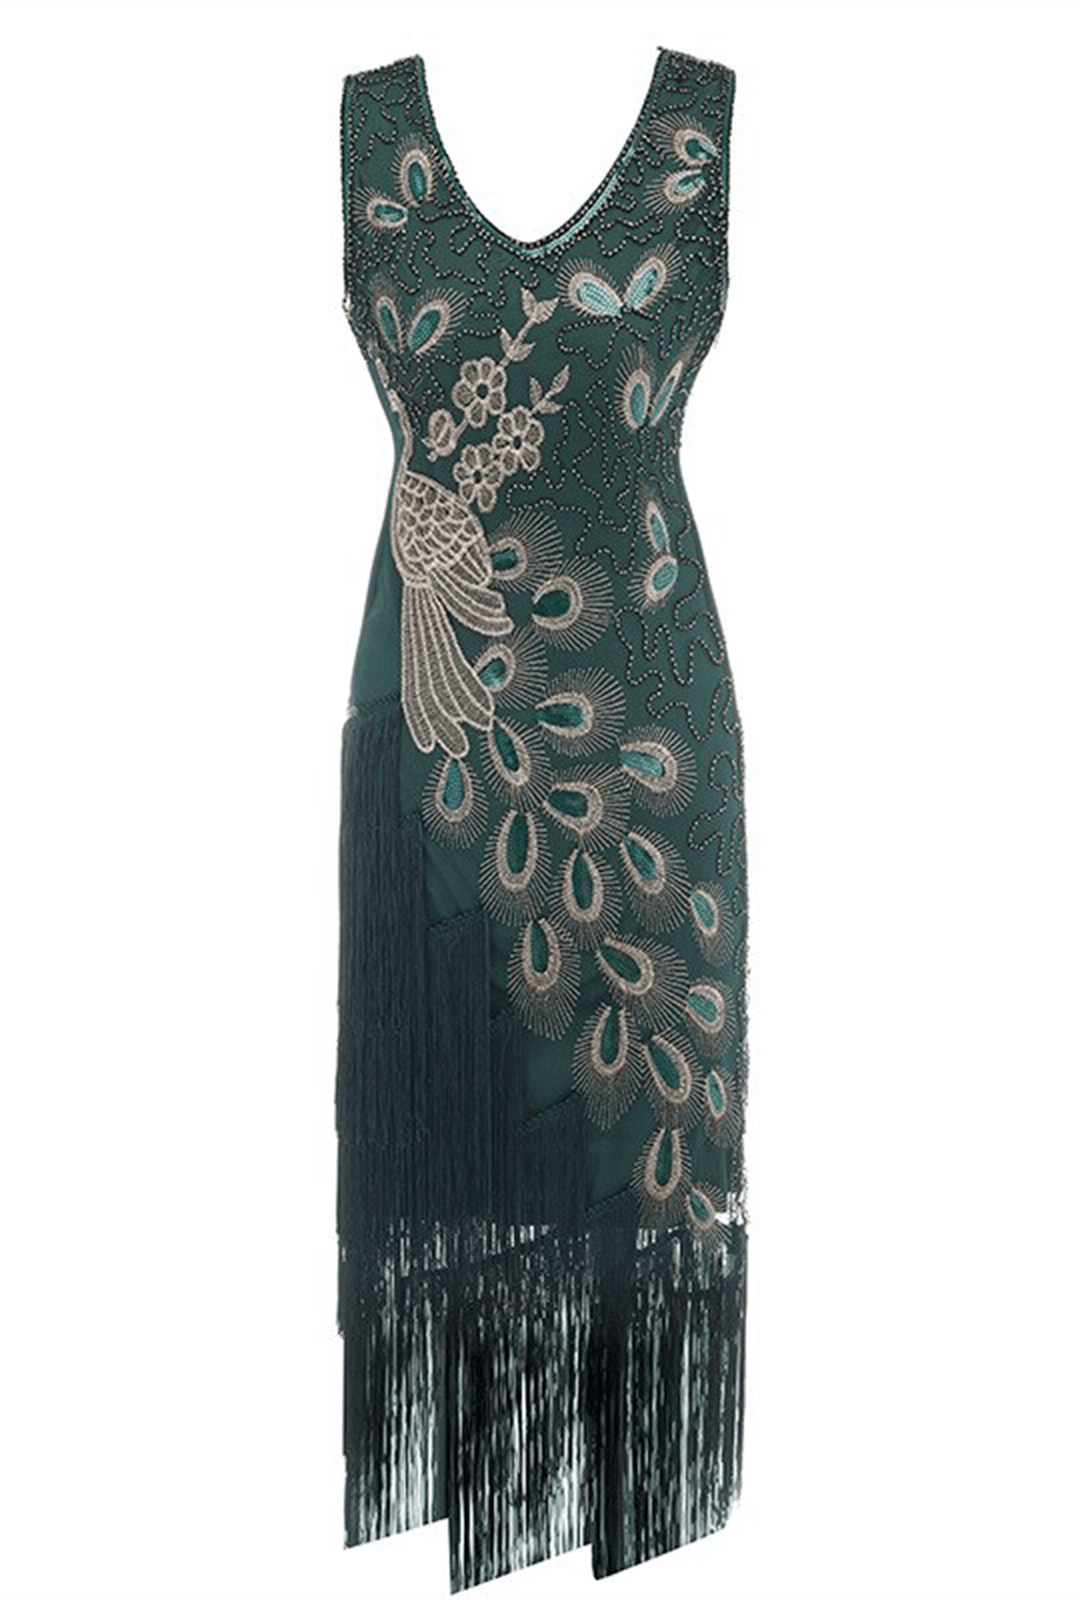 1920's Gatsby Green & Gold Peacock Dress